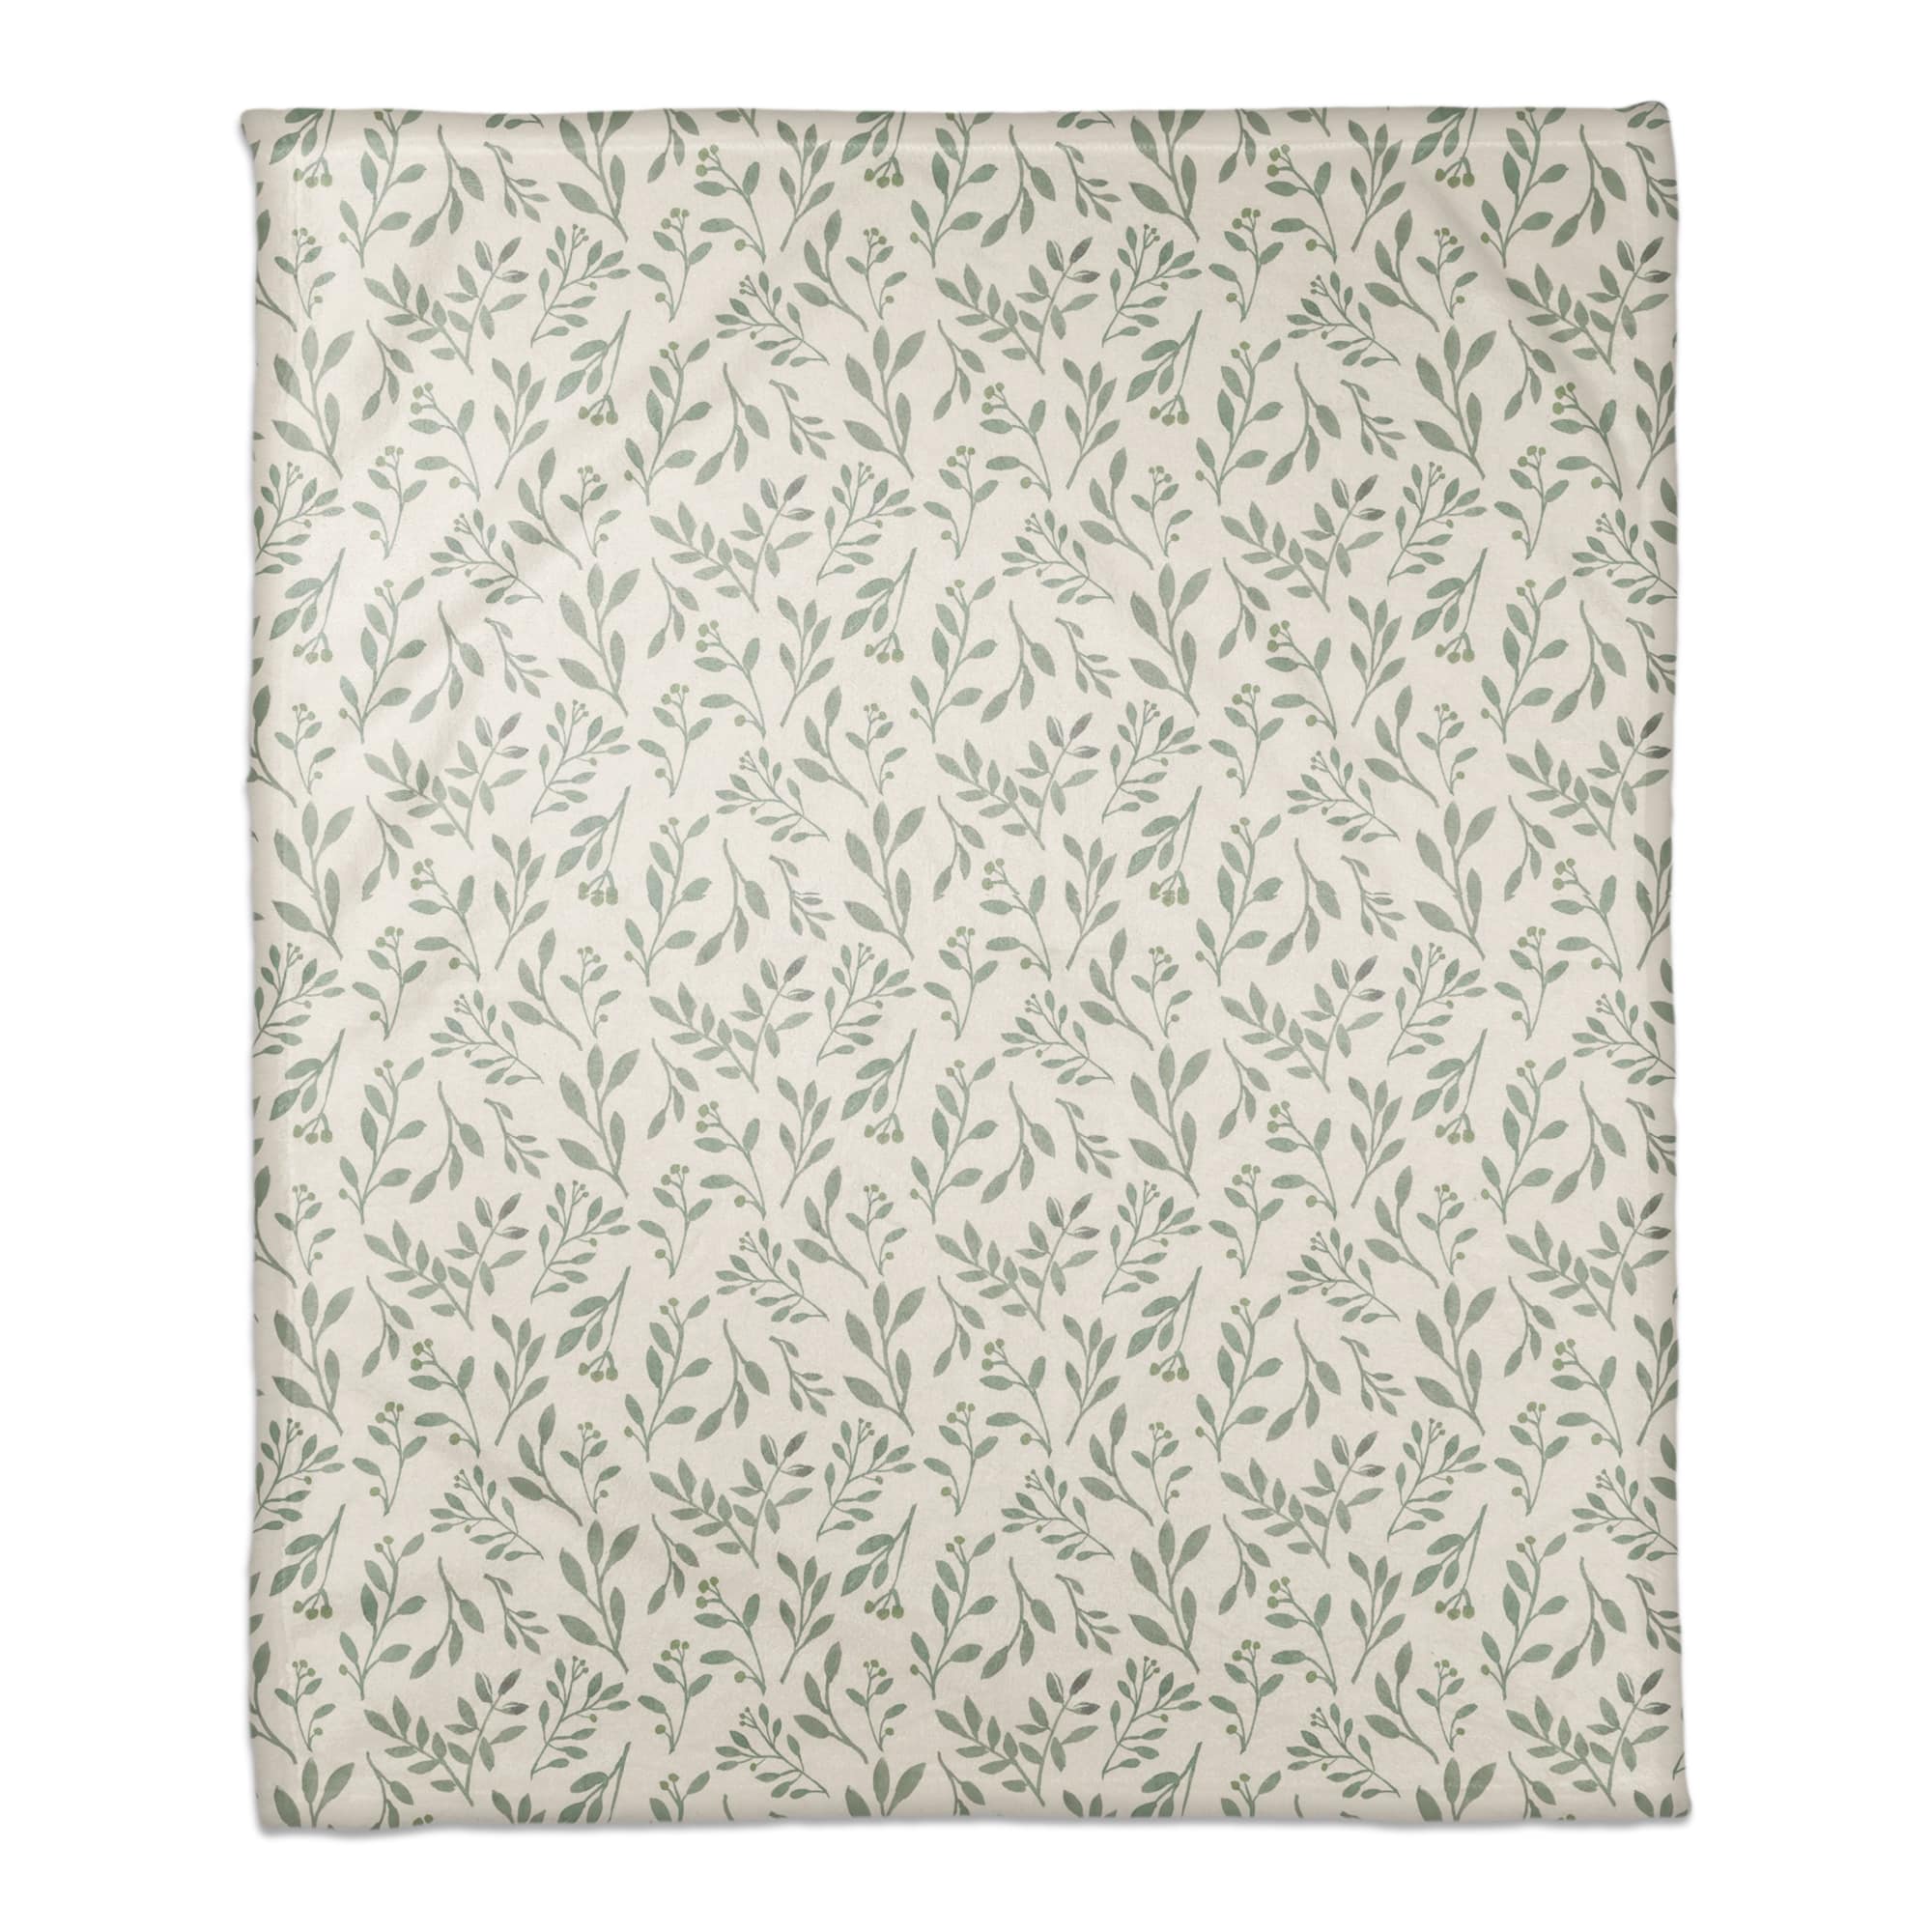 60" Delicate Floral Fleece Blanket